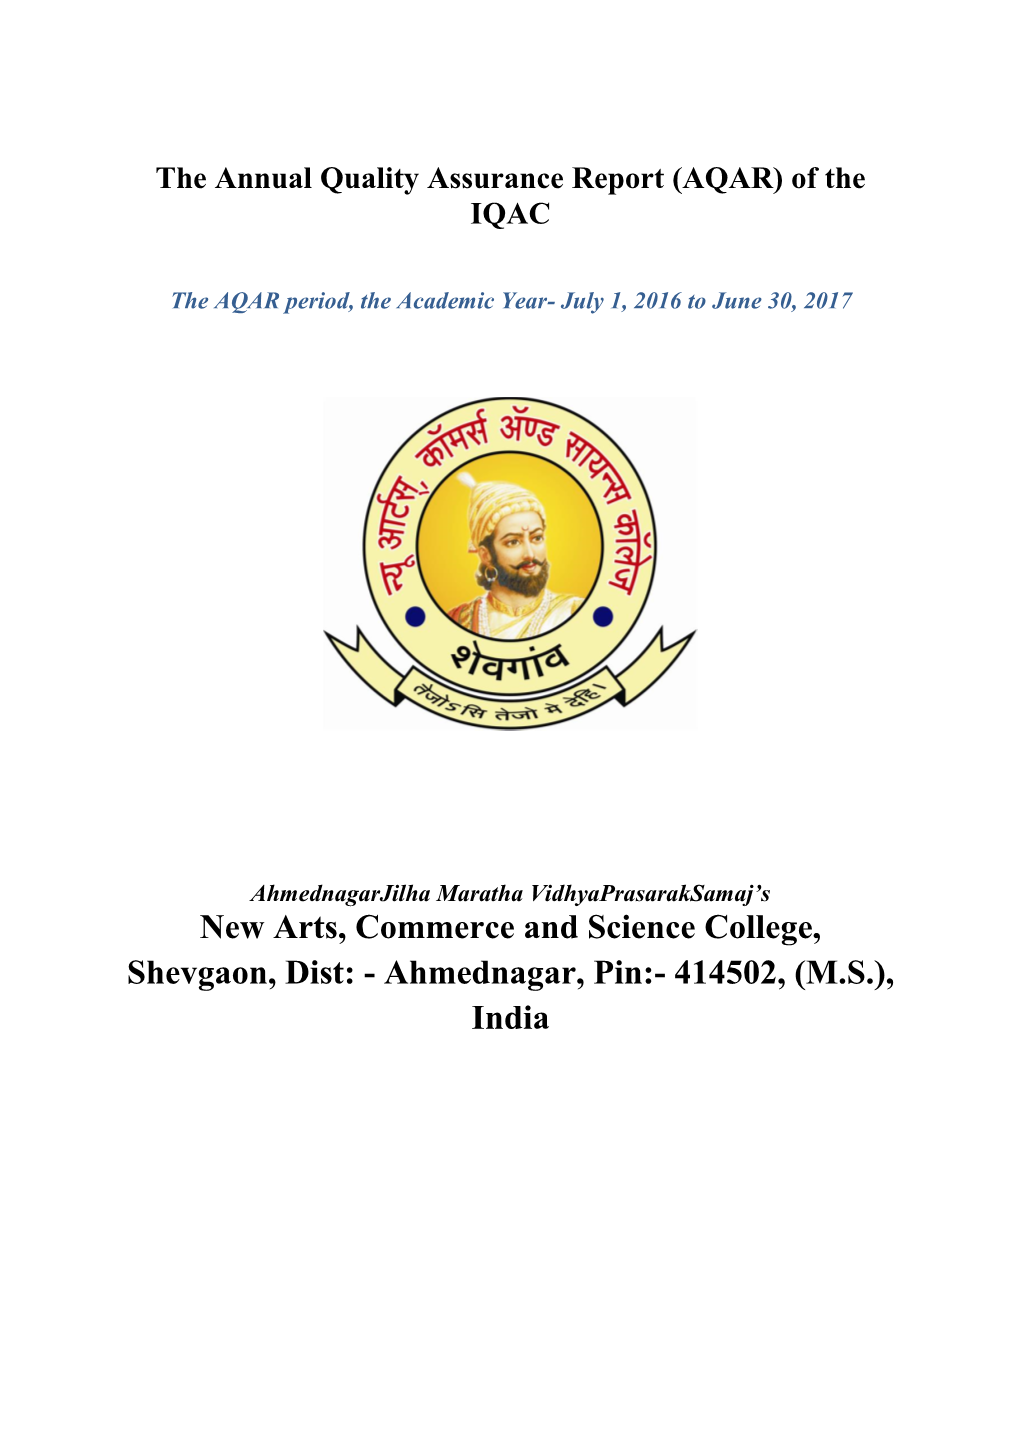 Ahmednagar, Pin:- 414502, (M.S.), India the Annual Quality Assurance Report (AQAR) of the IQAC